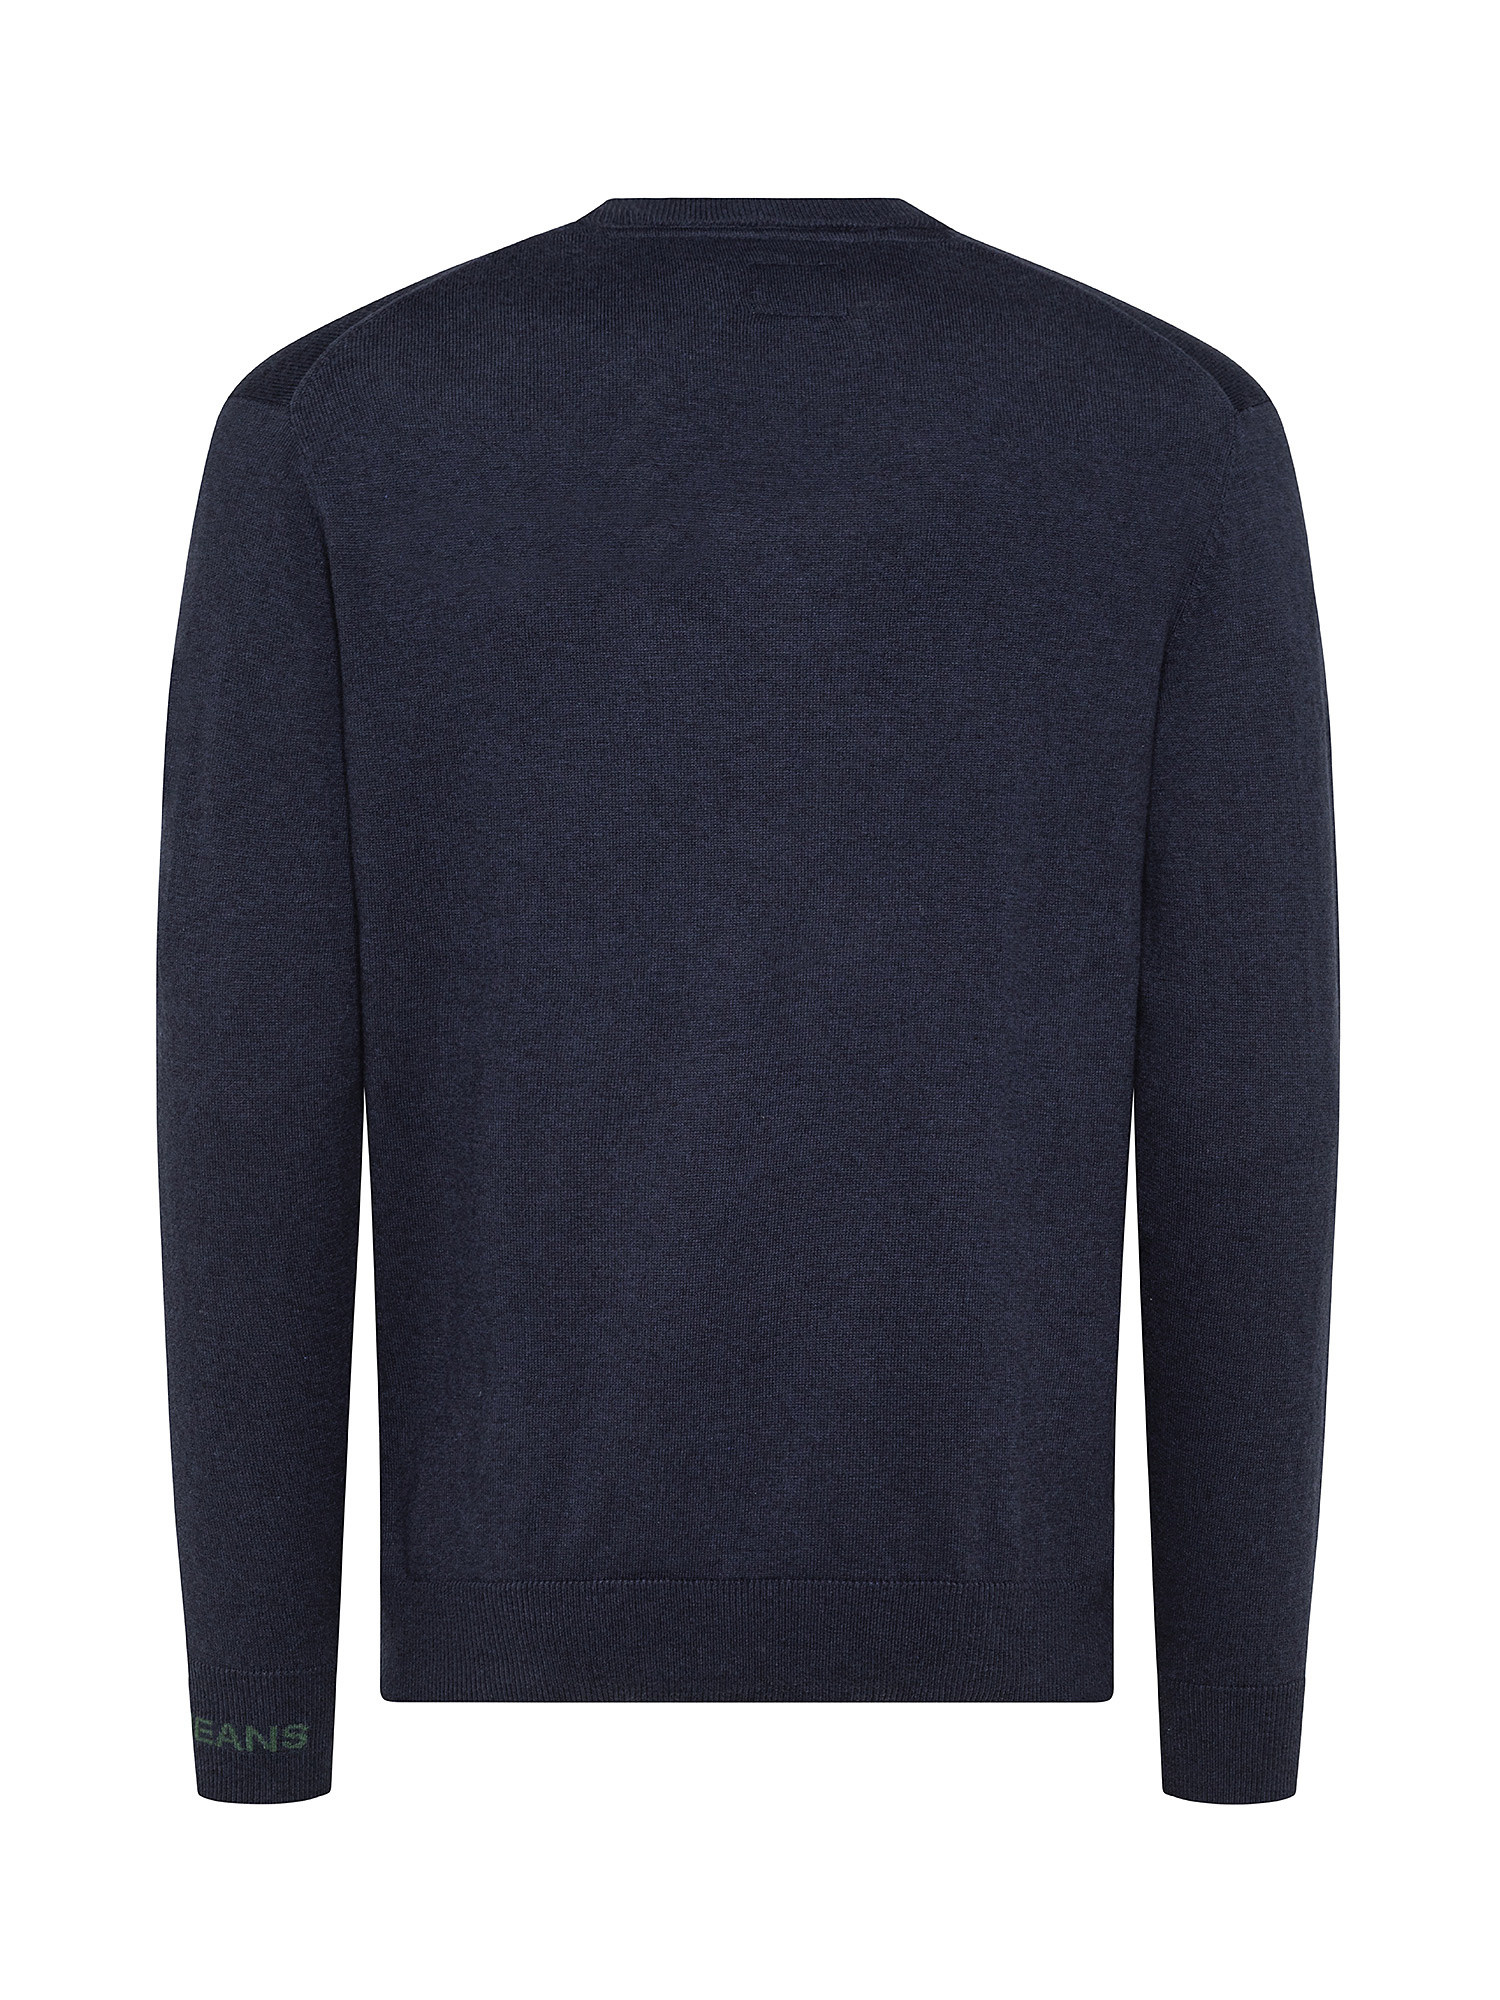 Andre fine knit sweater, Dark Blue, large image number 1